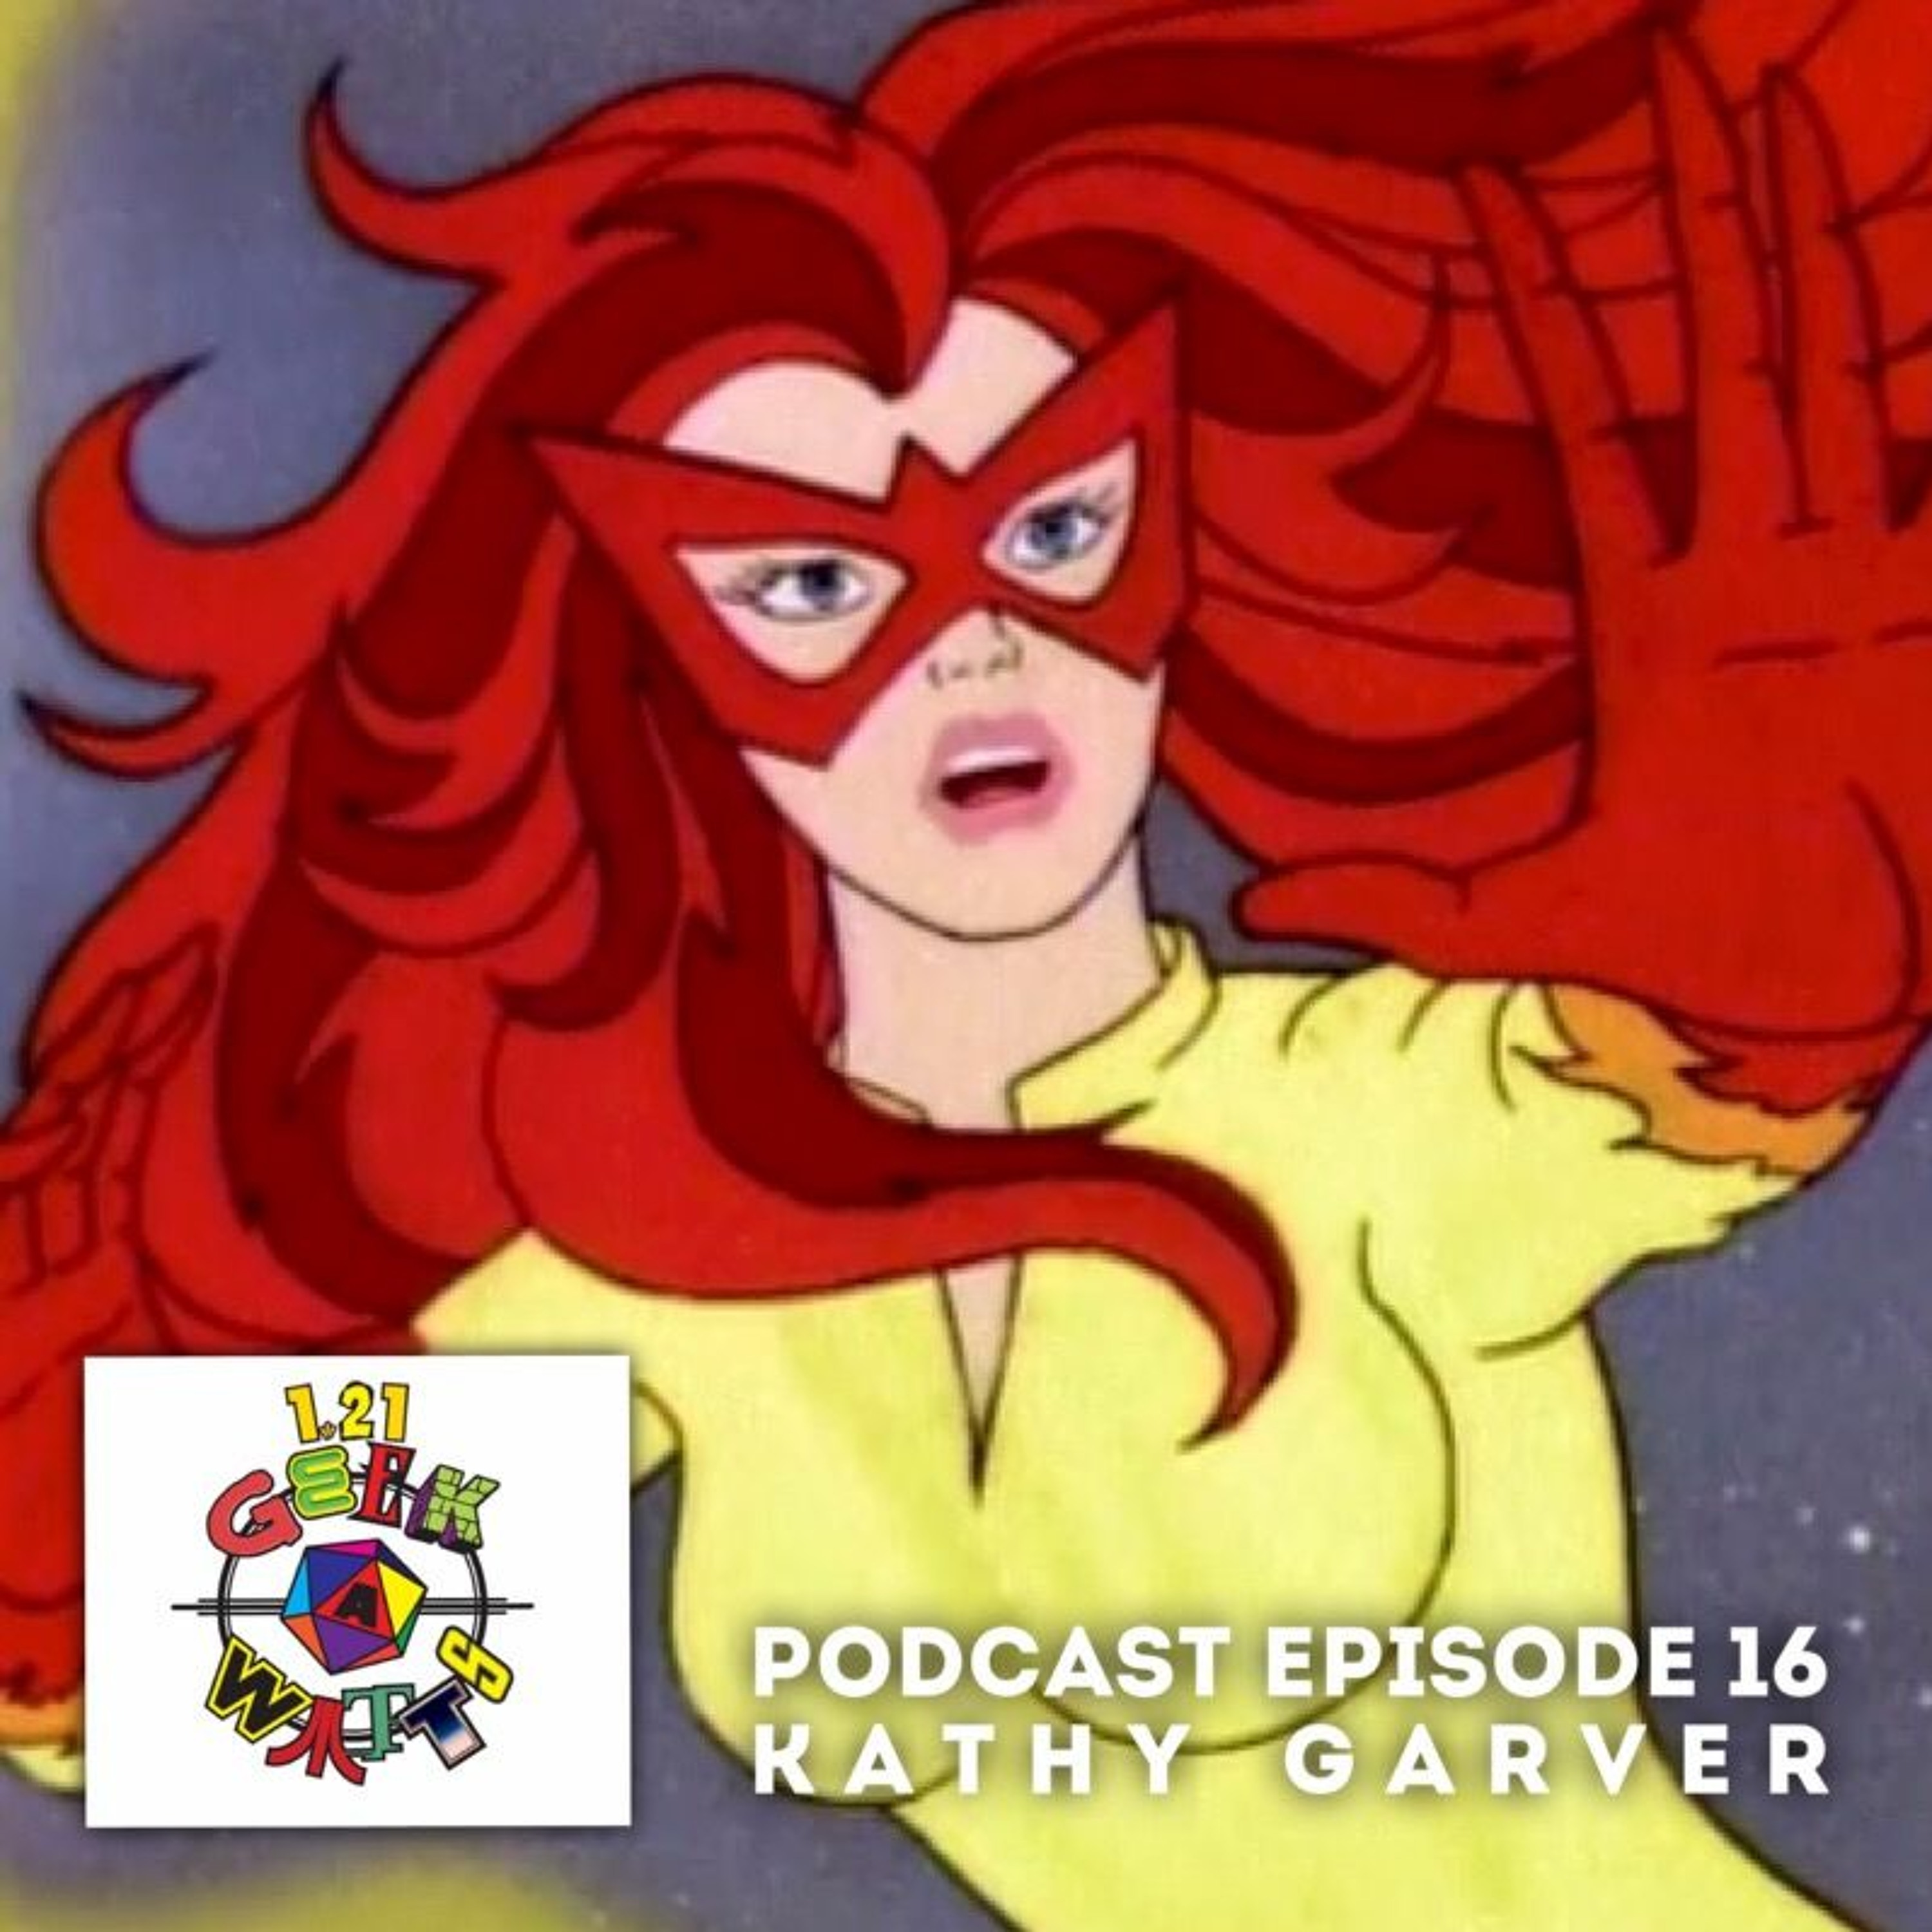 1.21 GEEKAWATTS Episode #16 (with Kathy Garver!)